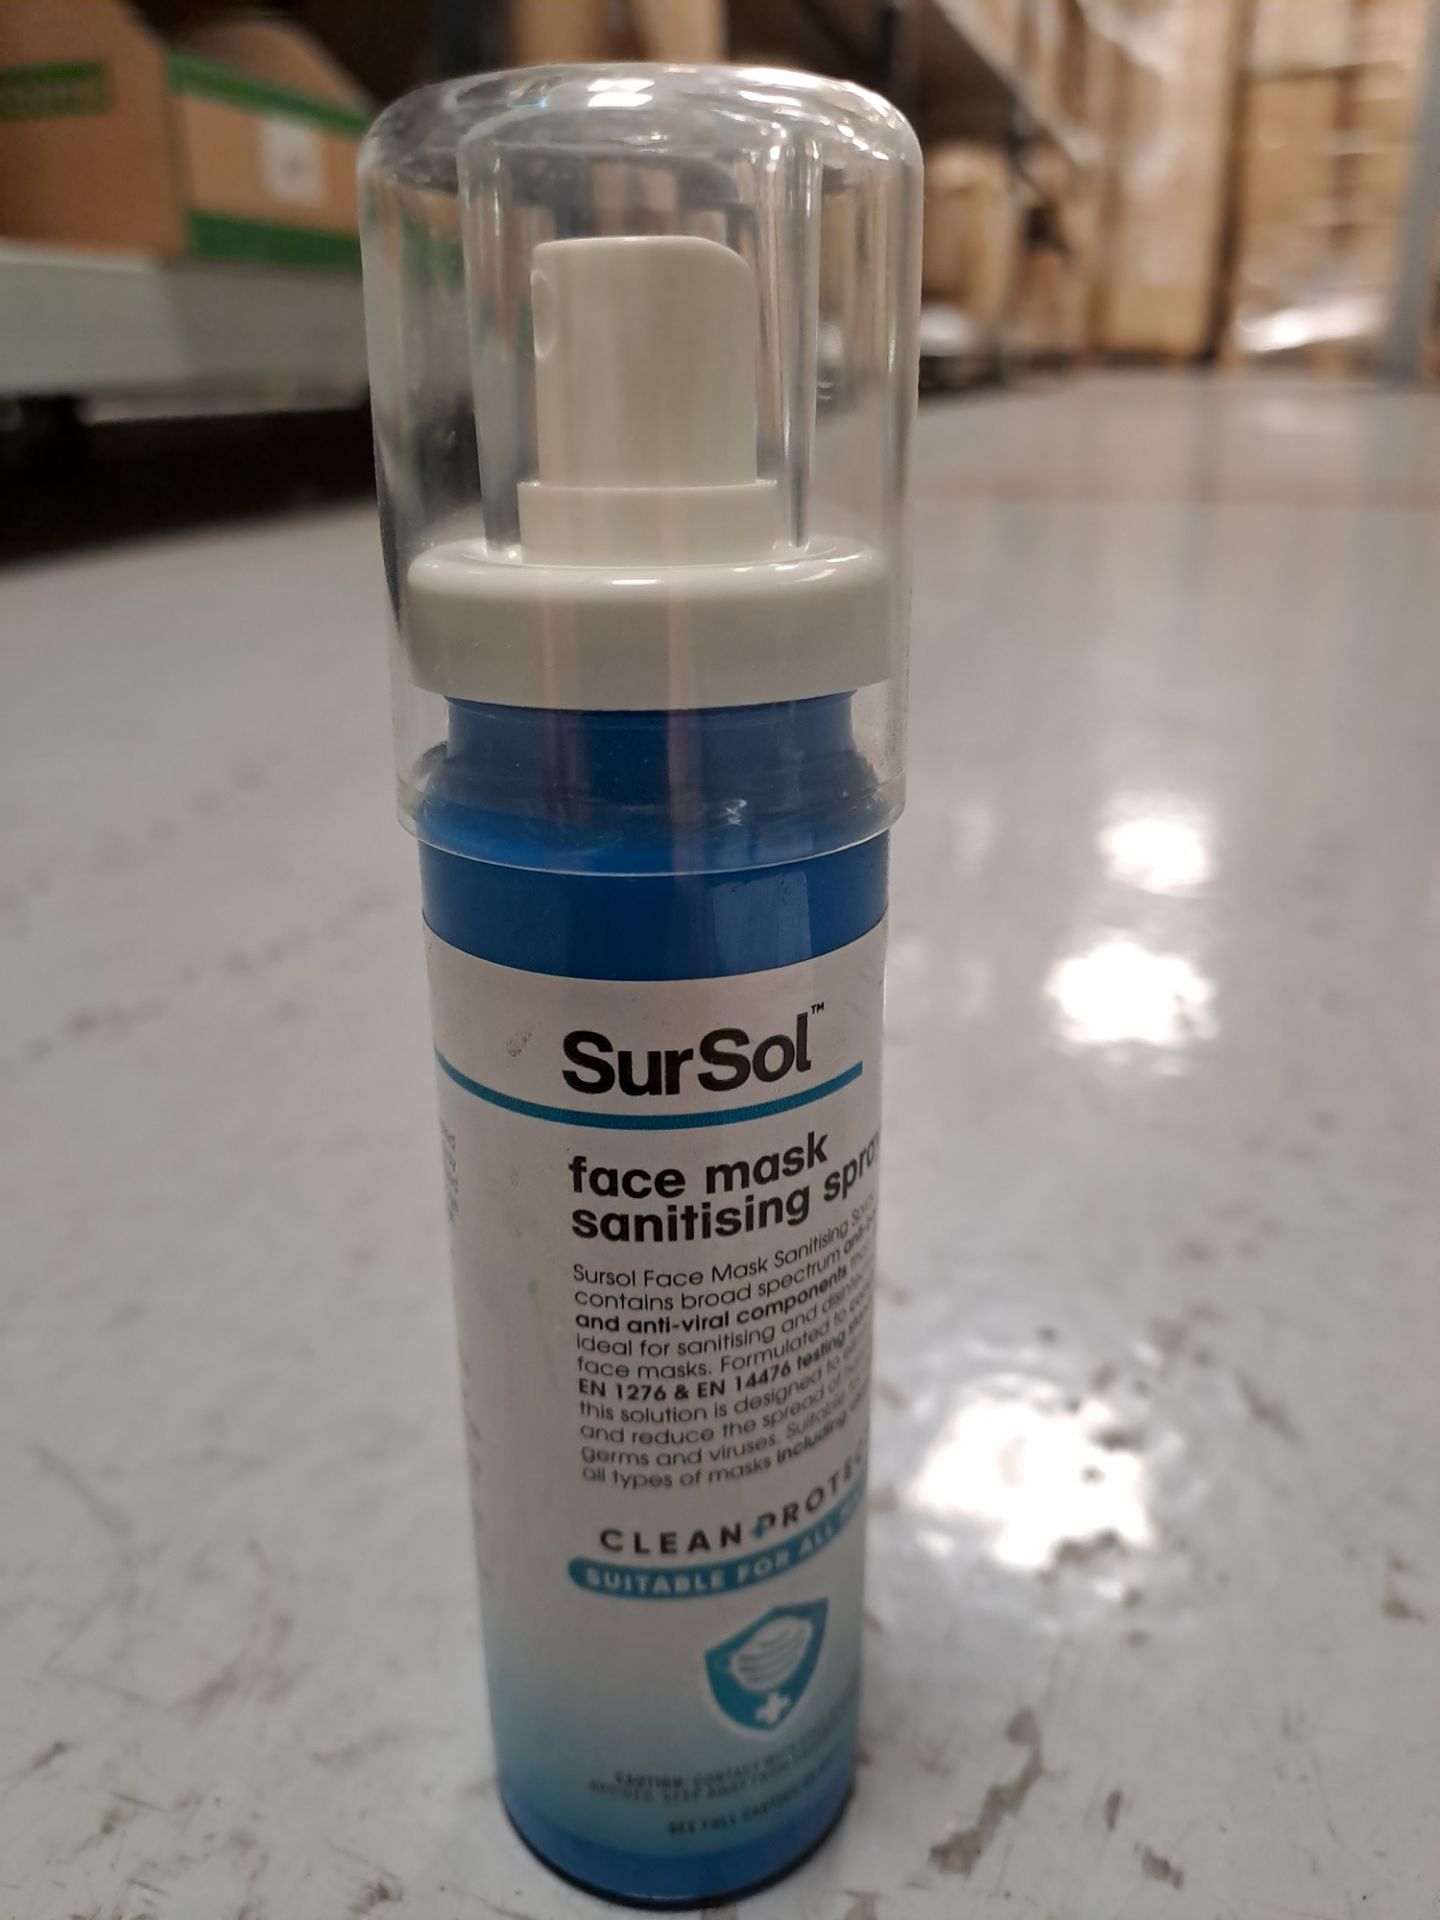 Lot 81 SurSol Face Mask Sanitising Spray 75ml Bottle x 49 Units